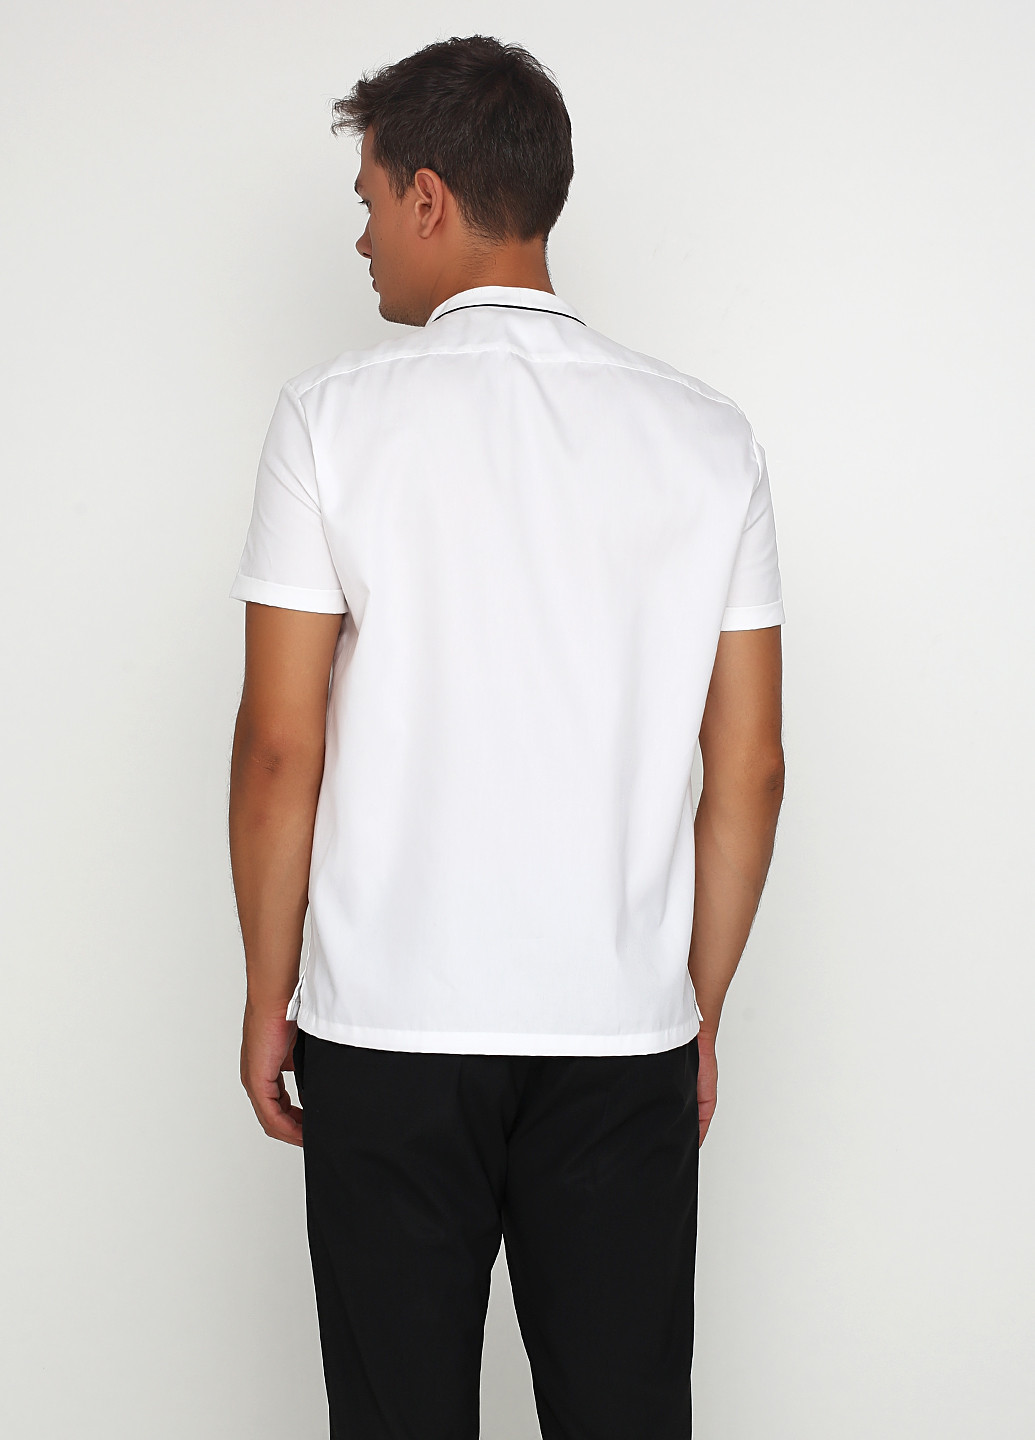 Белая кэжуал рубашка однотонная Drykorn с коротким рукавом